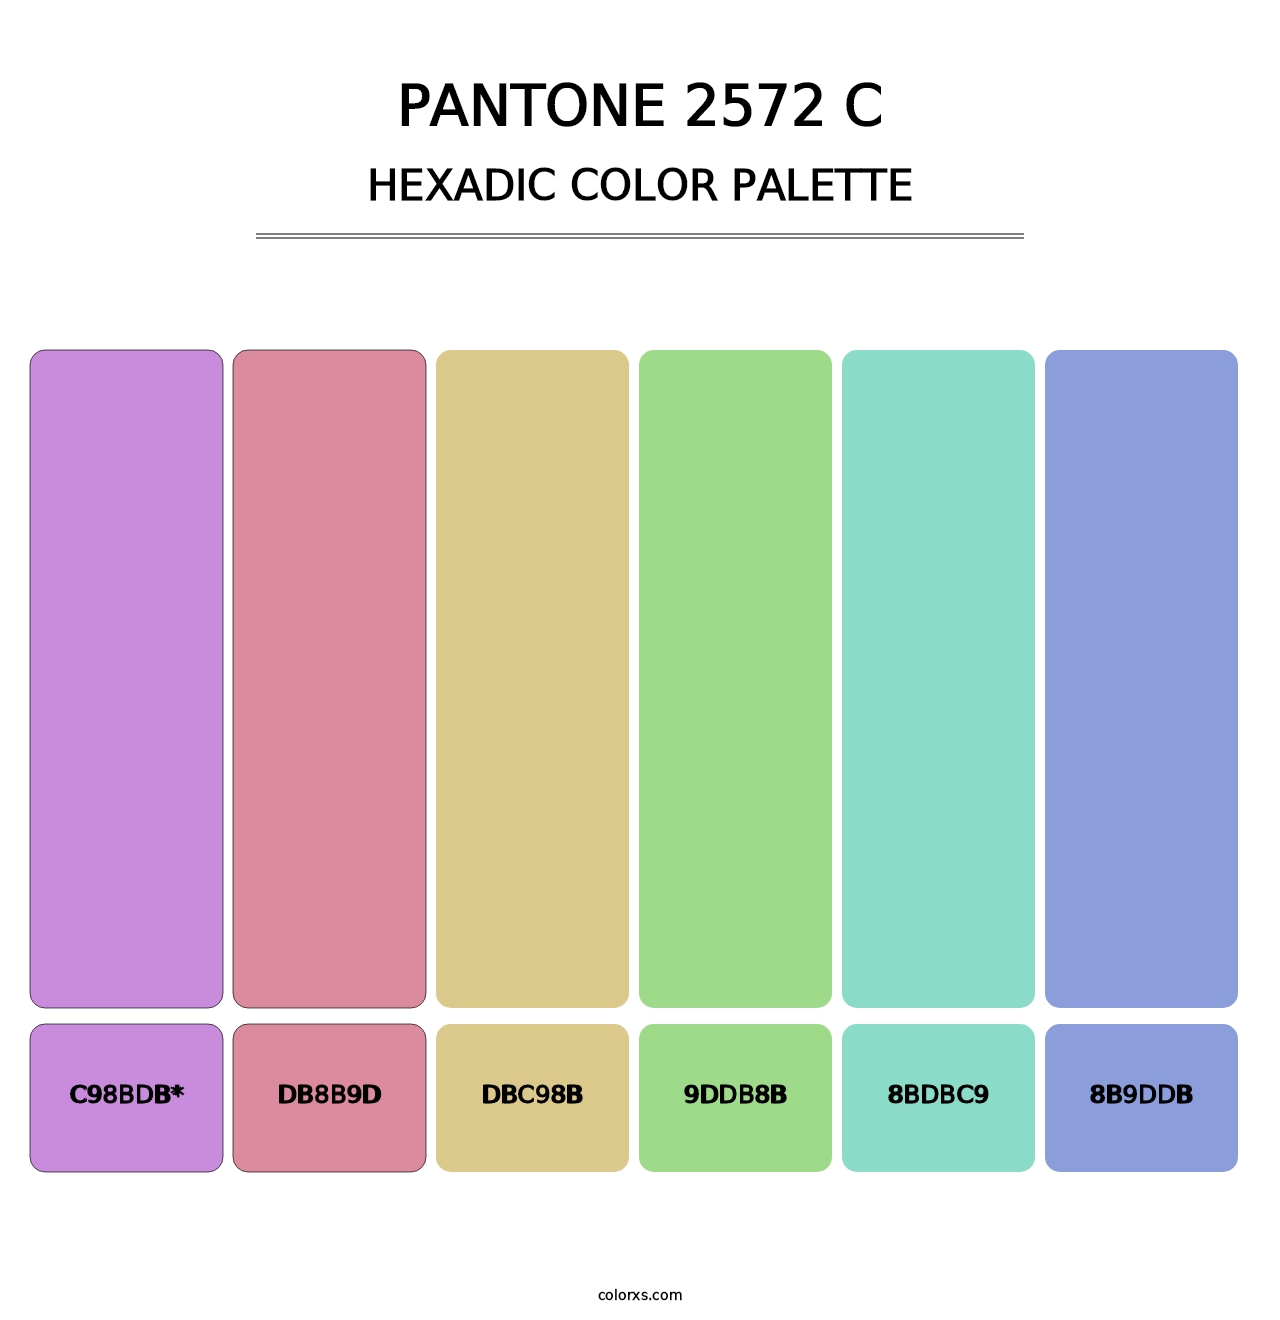 PANTONE 2572 C - Hexadic Color Palette